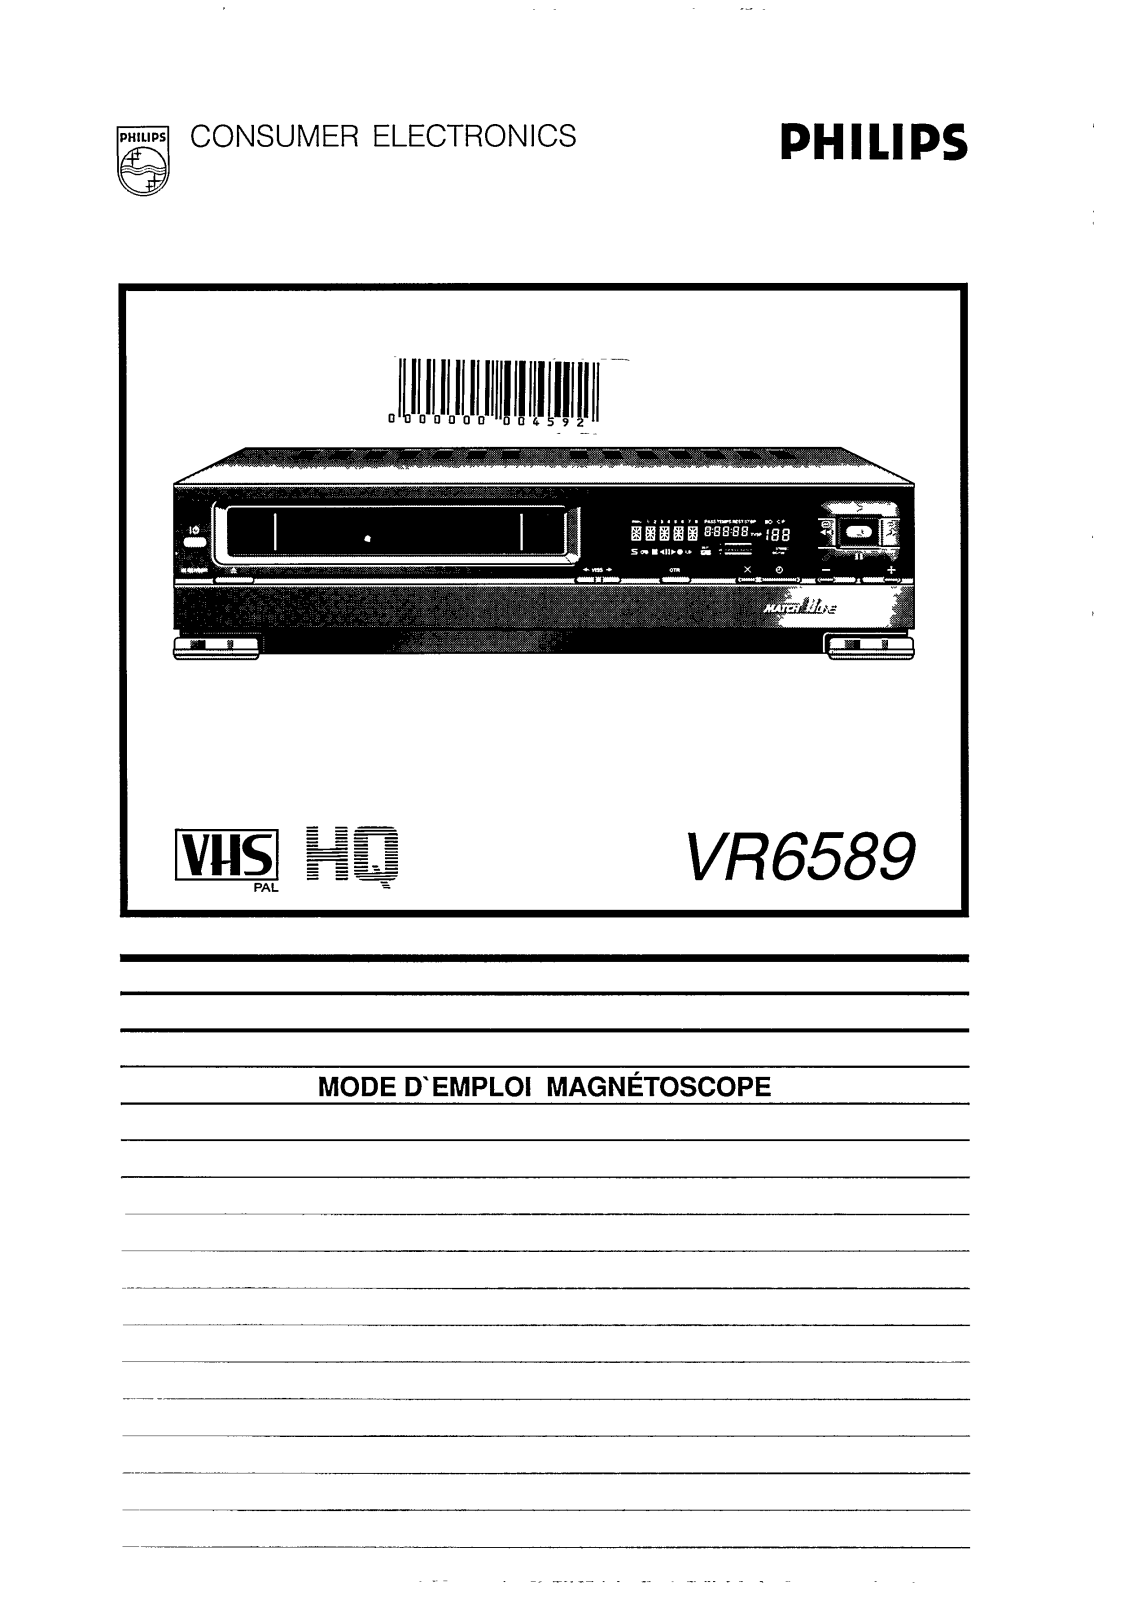 Philips VR6589 User Manual